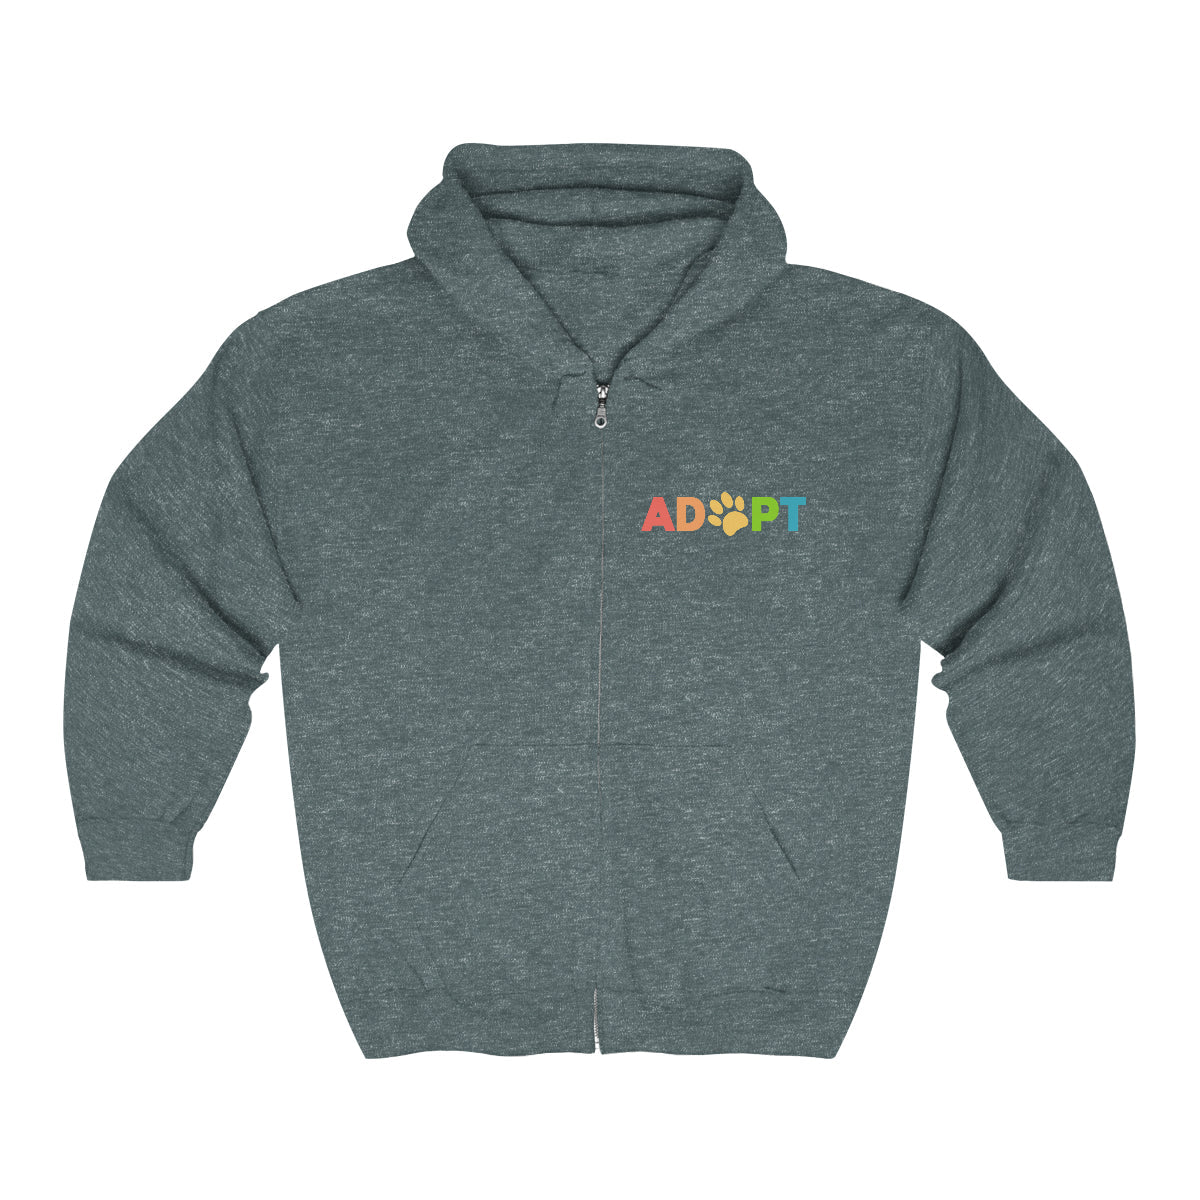 Adopt Rainbow | Zip-up Sweatshirt - Detezi Designs-31469338919765825787